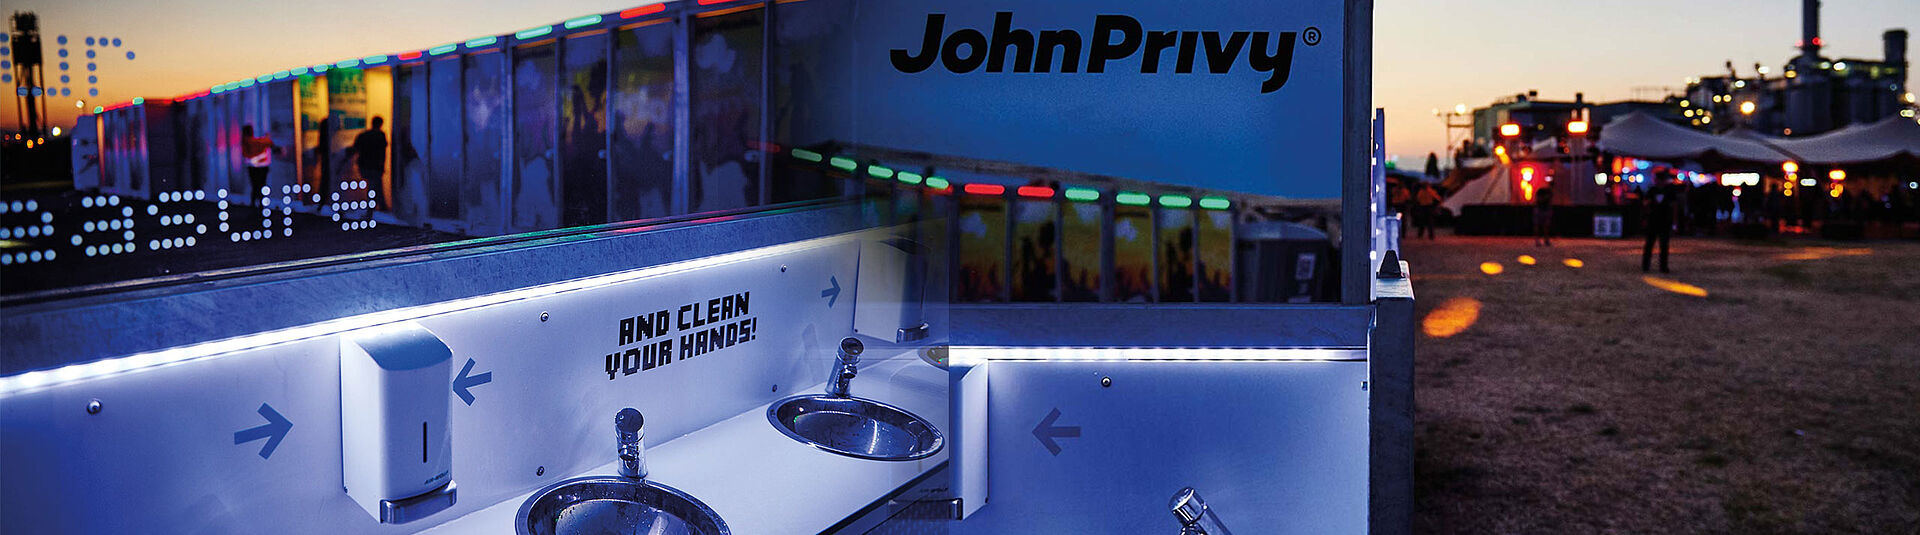 John Privy®